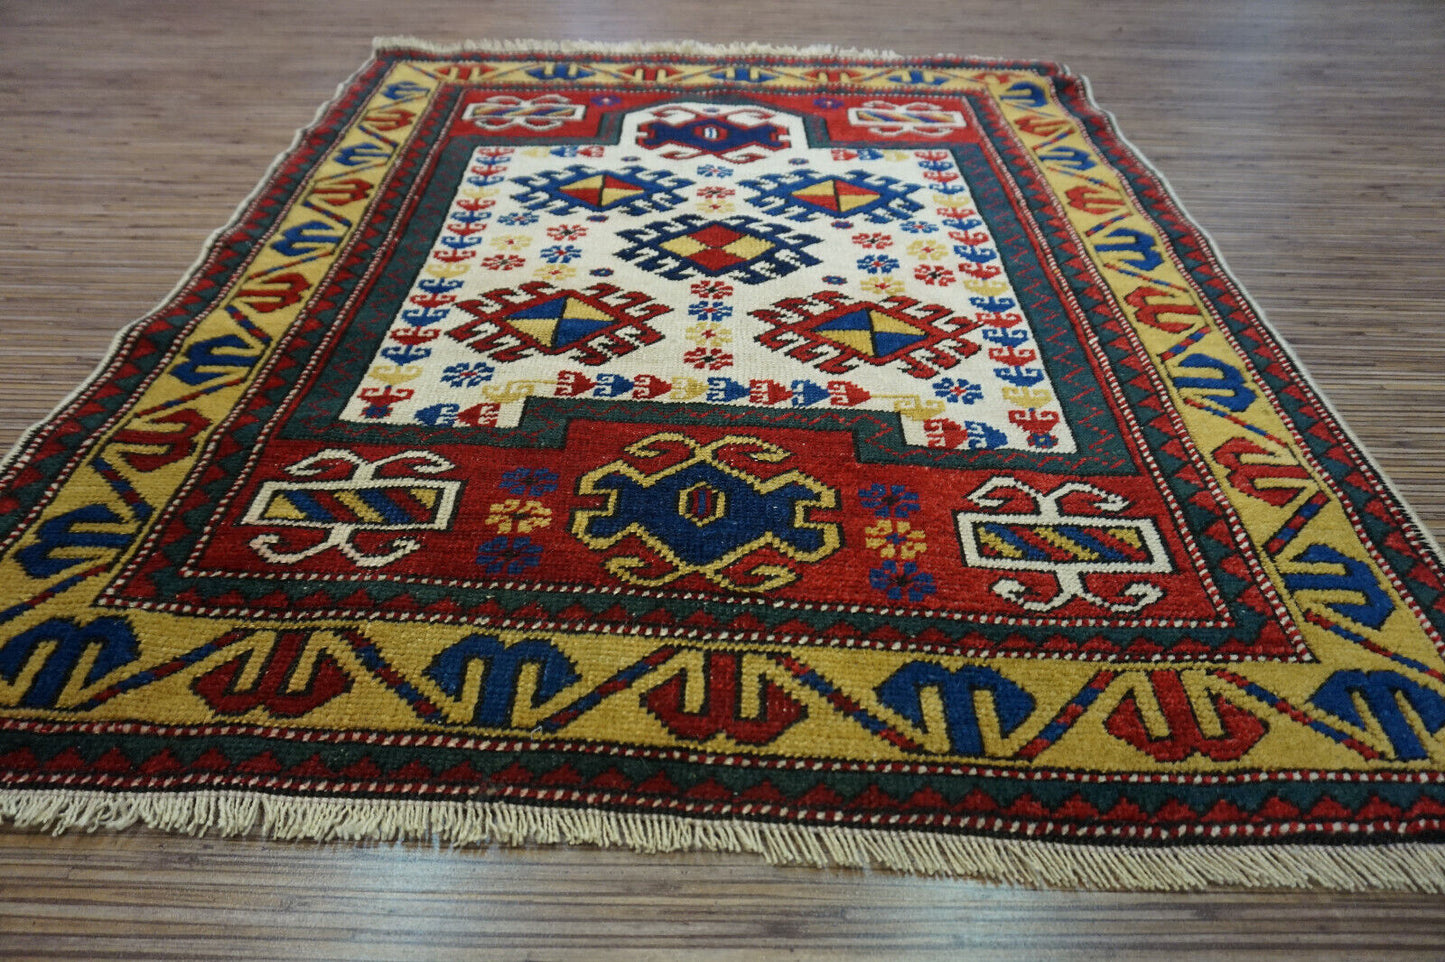  Artistic display of the Handmade Antique Caucasian Kazak Prayer Rug as a statement piece